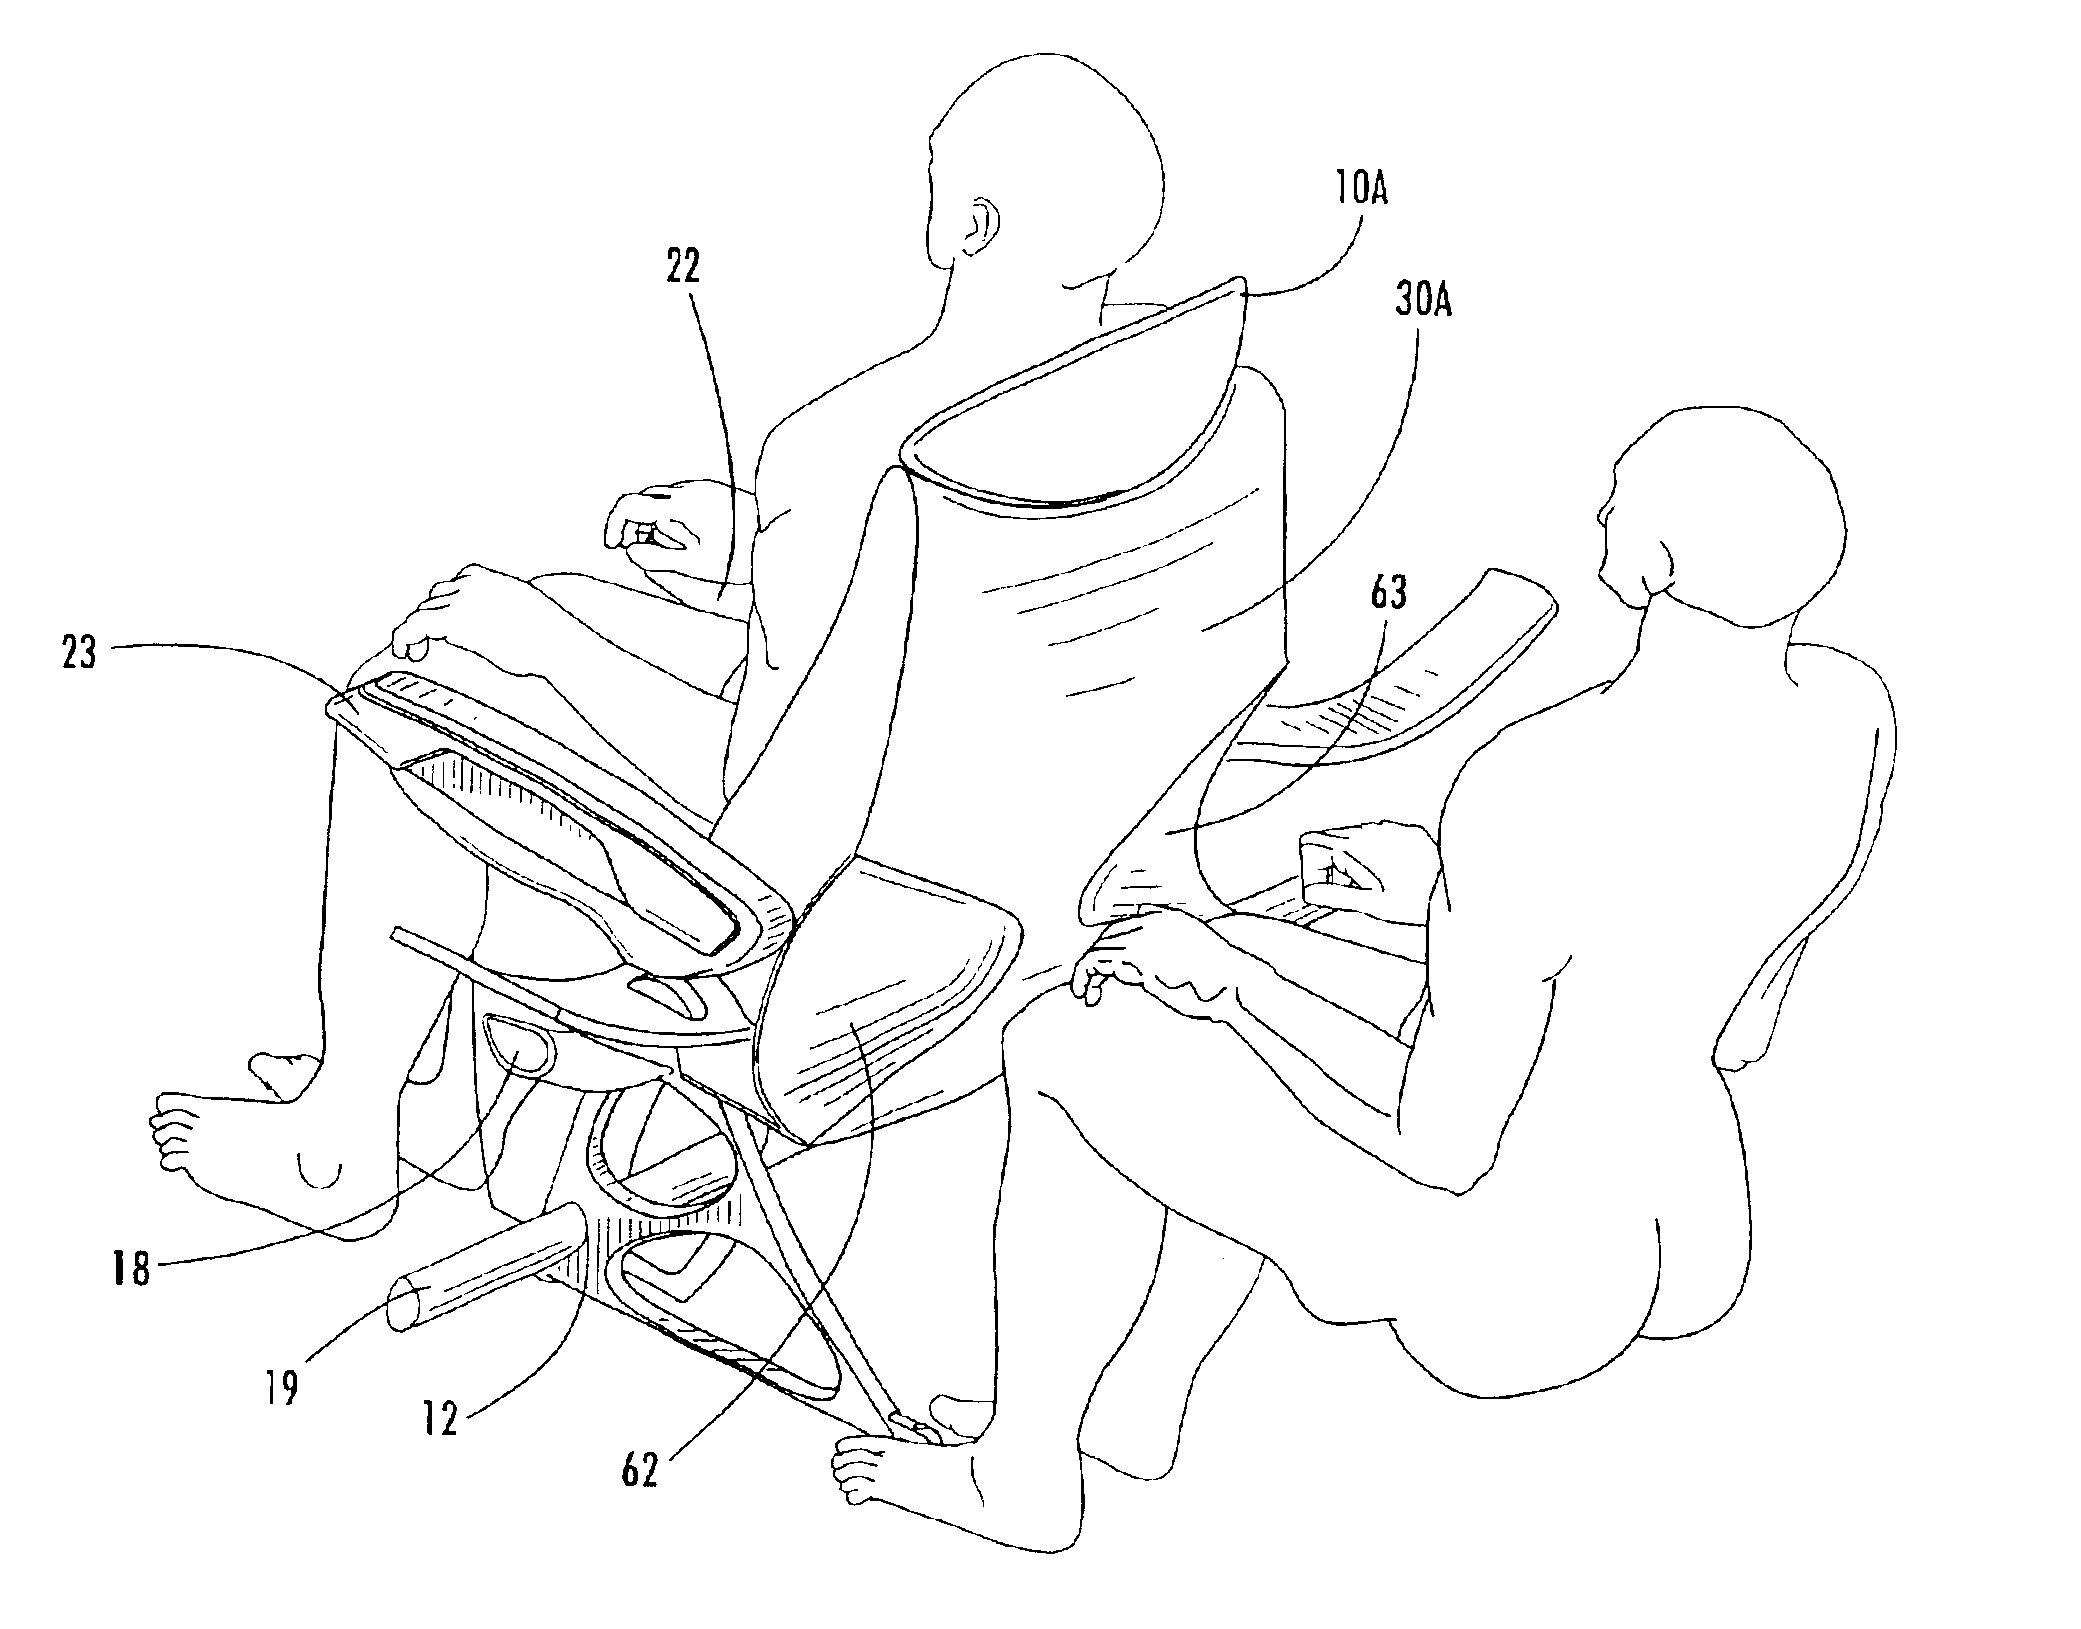 Aircraft passenger seat with forward arm rest pivot